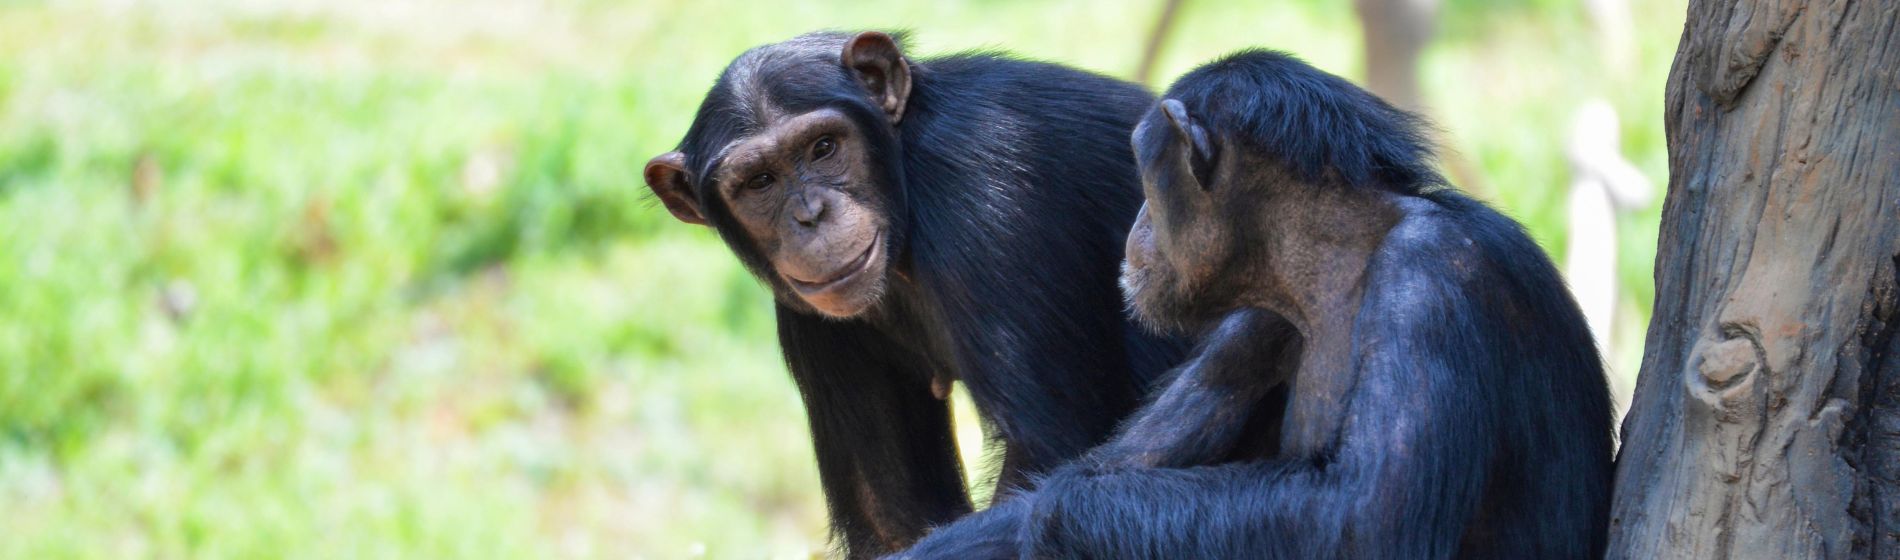 schimpansen_uganda.jpg